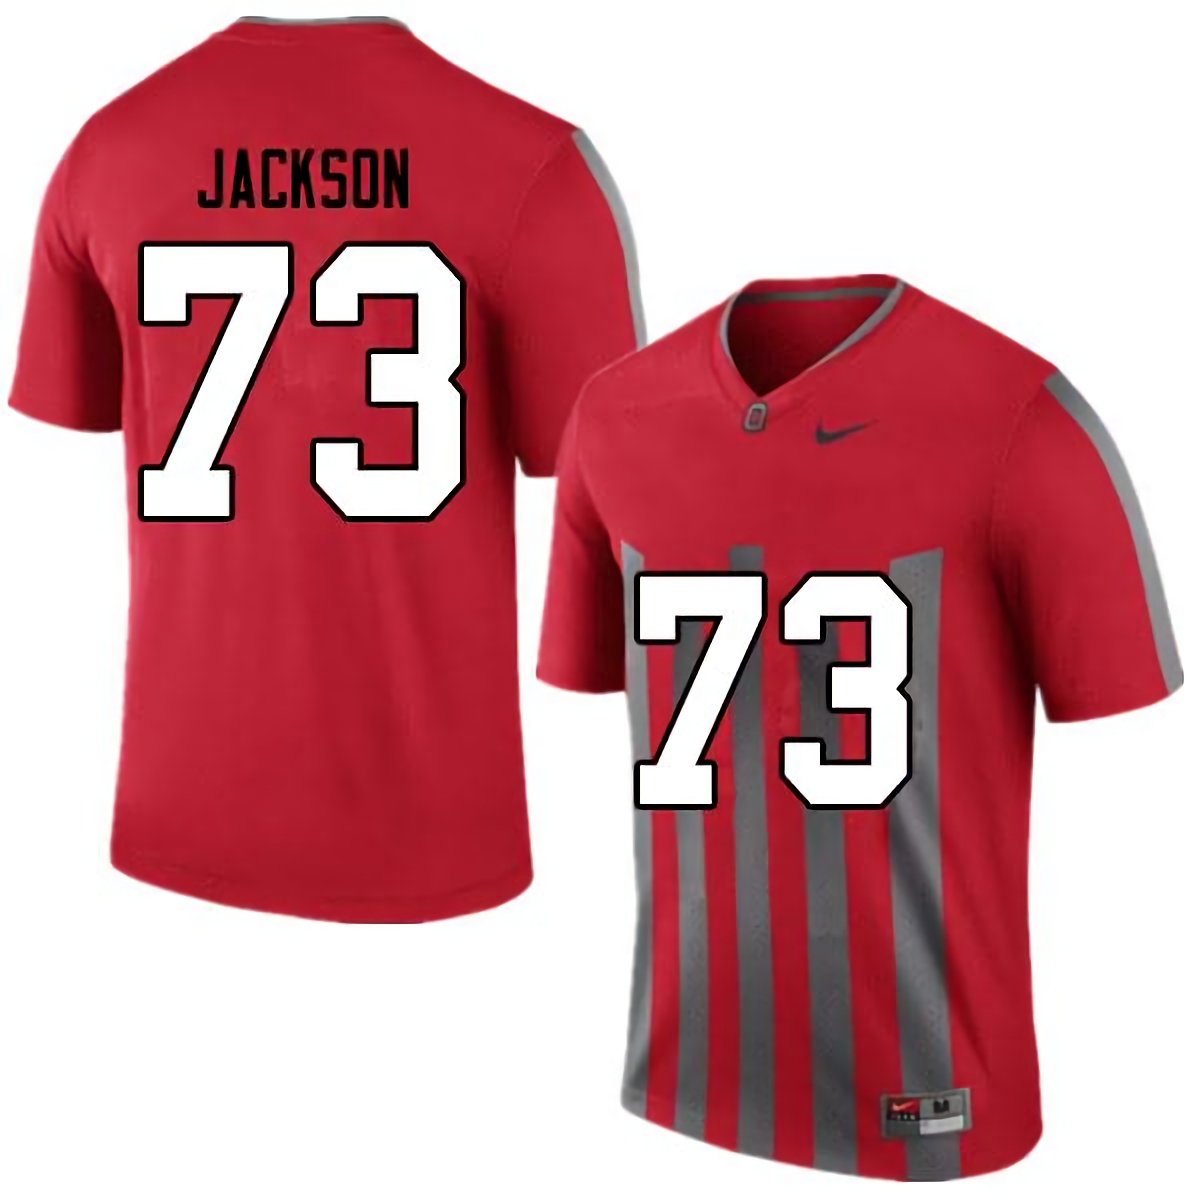 Jonah Jackson Ohio State Buckeyes Men's NCAA #73 Nike Retro College Stitched Football Jersey KZU7256XM